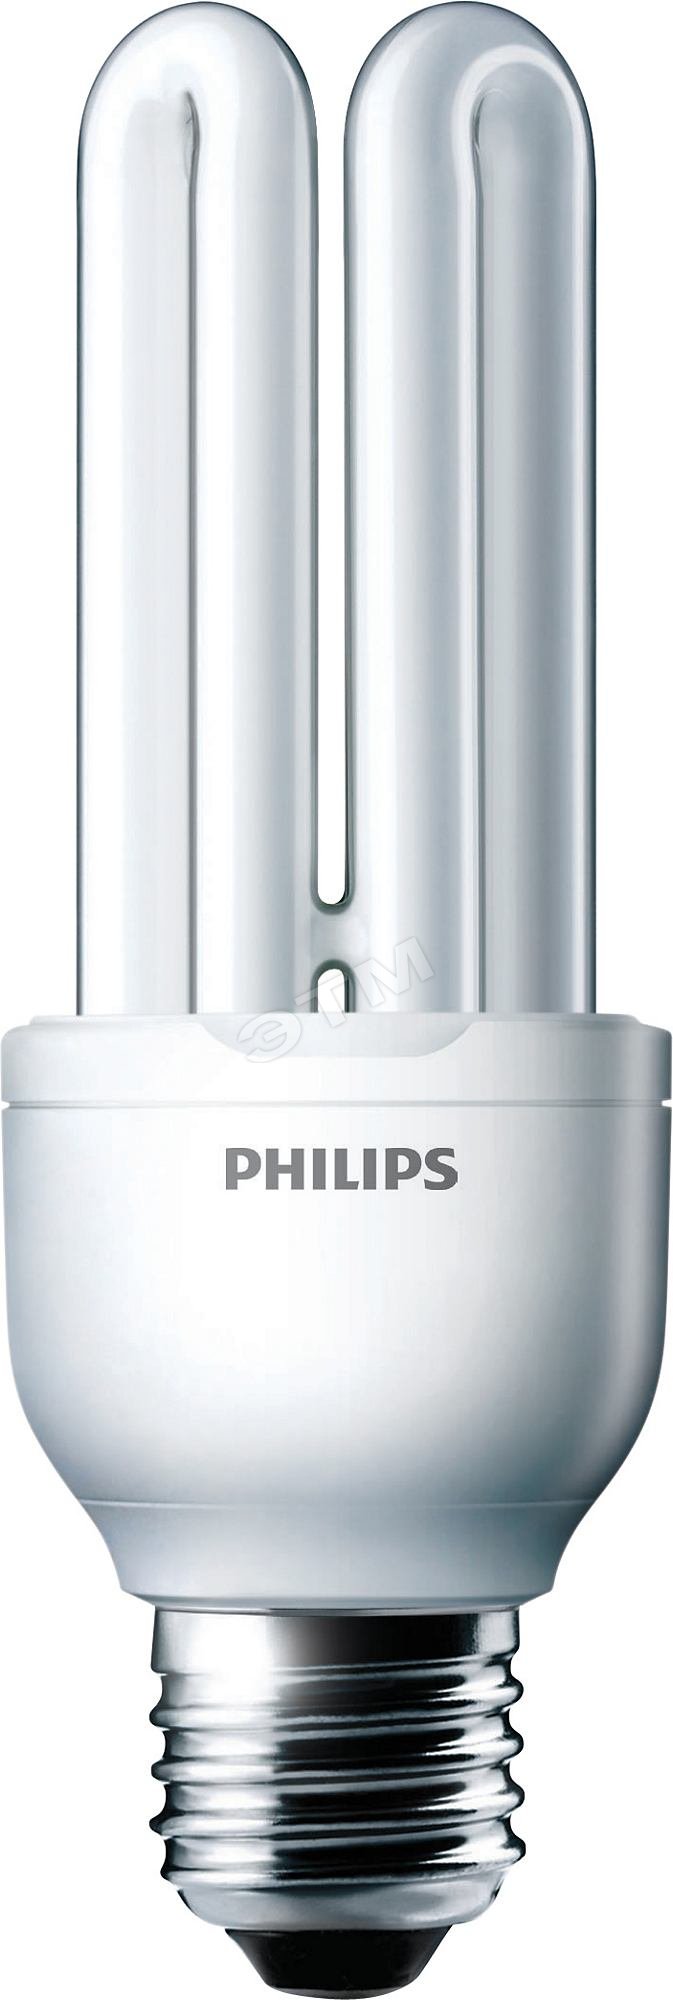 Энергосберегающие лампы Philips 18w. Лампа Philips Ecohome Stick 23w CDL e27. Лампа люминесцентная компактная энергосберегающая Philips Ecotone 220-240b 18bt. Philips 30w e27 220-240 led. Филипс 18